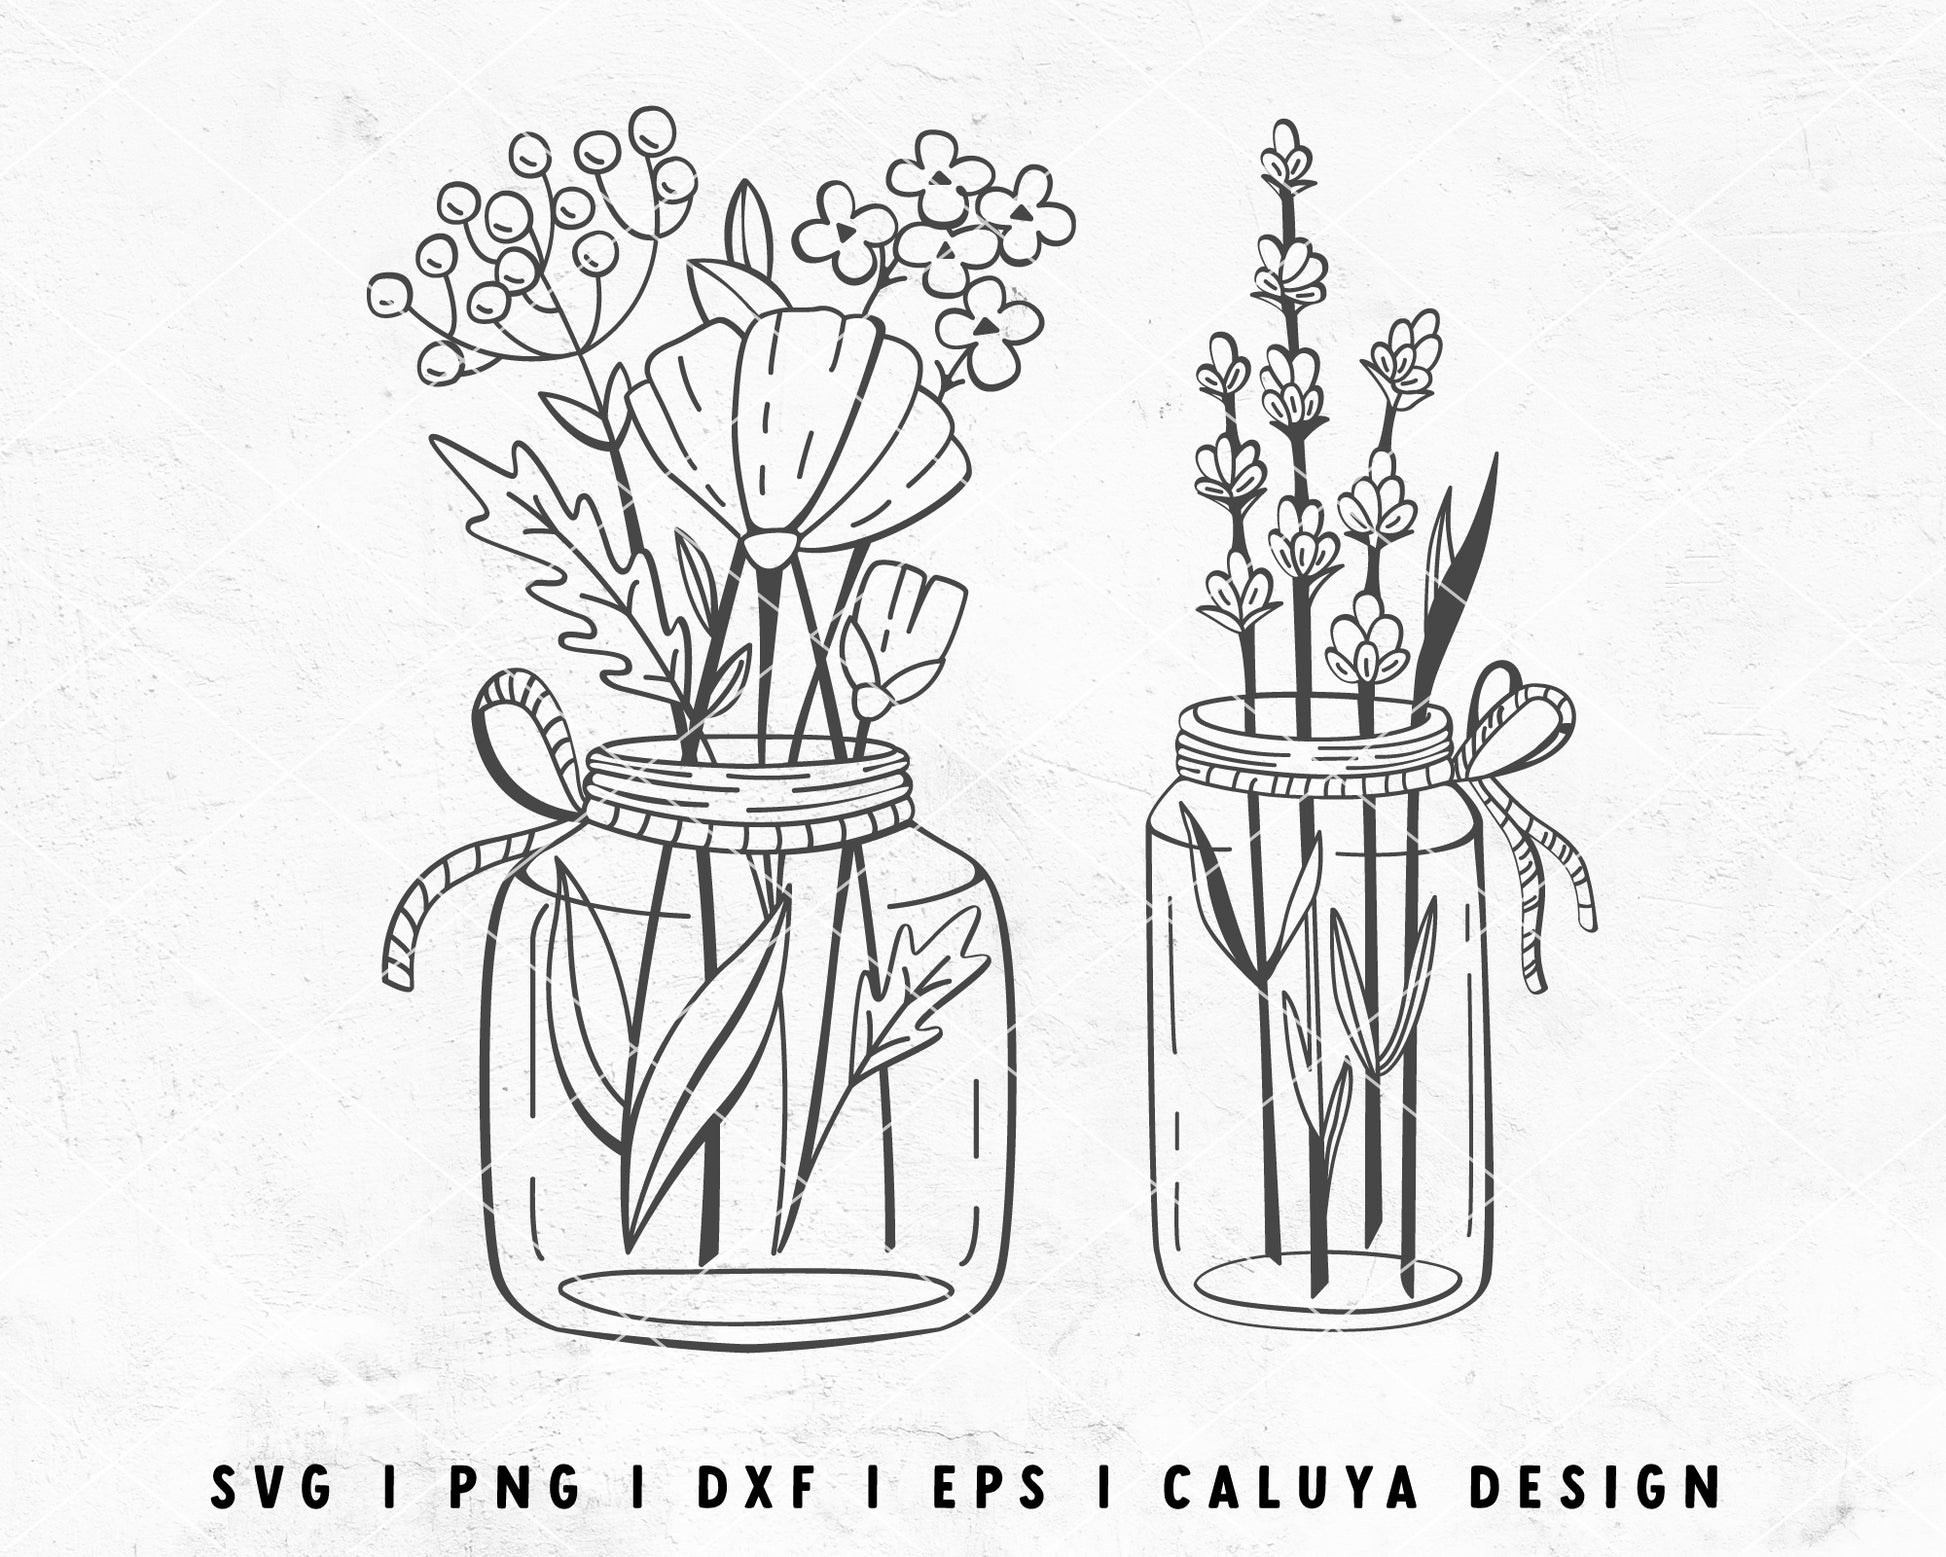 FREE Mason Jar SVG | Flower Bouquet SVG Cut File for Cricut, Cameo Silhouette | Free SVG Cut File